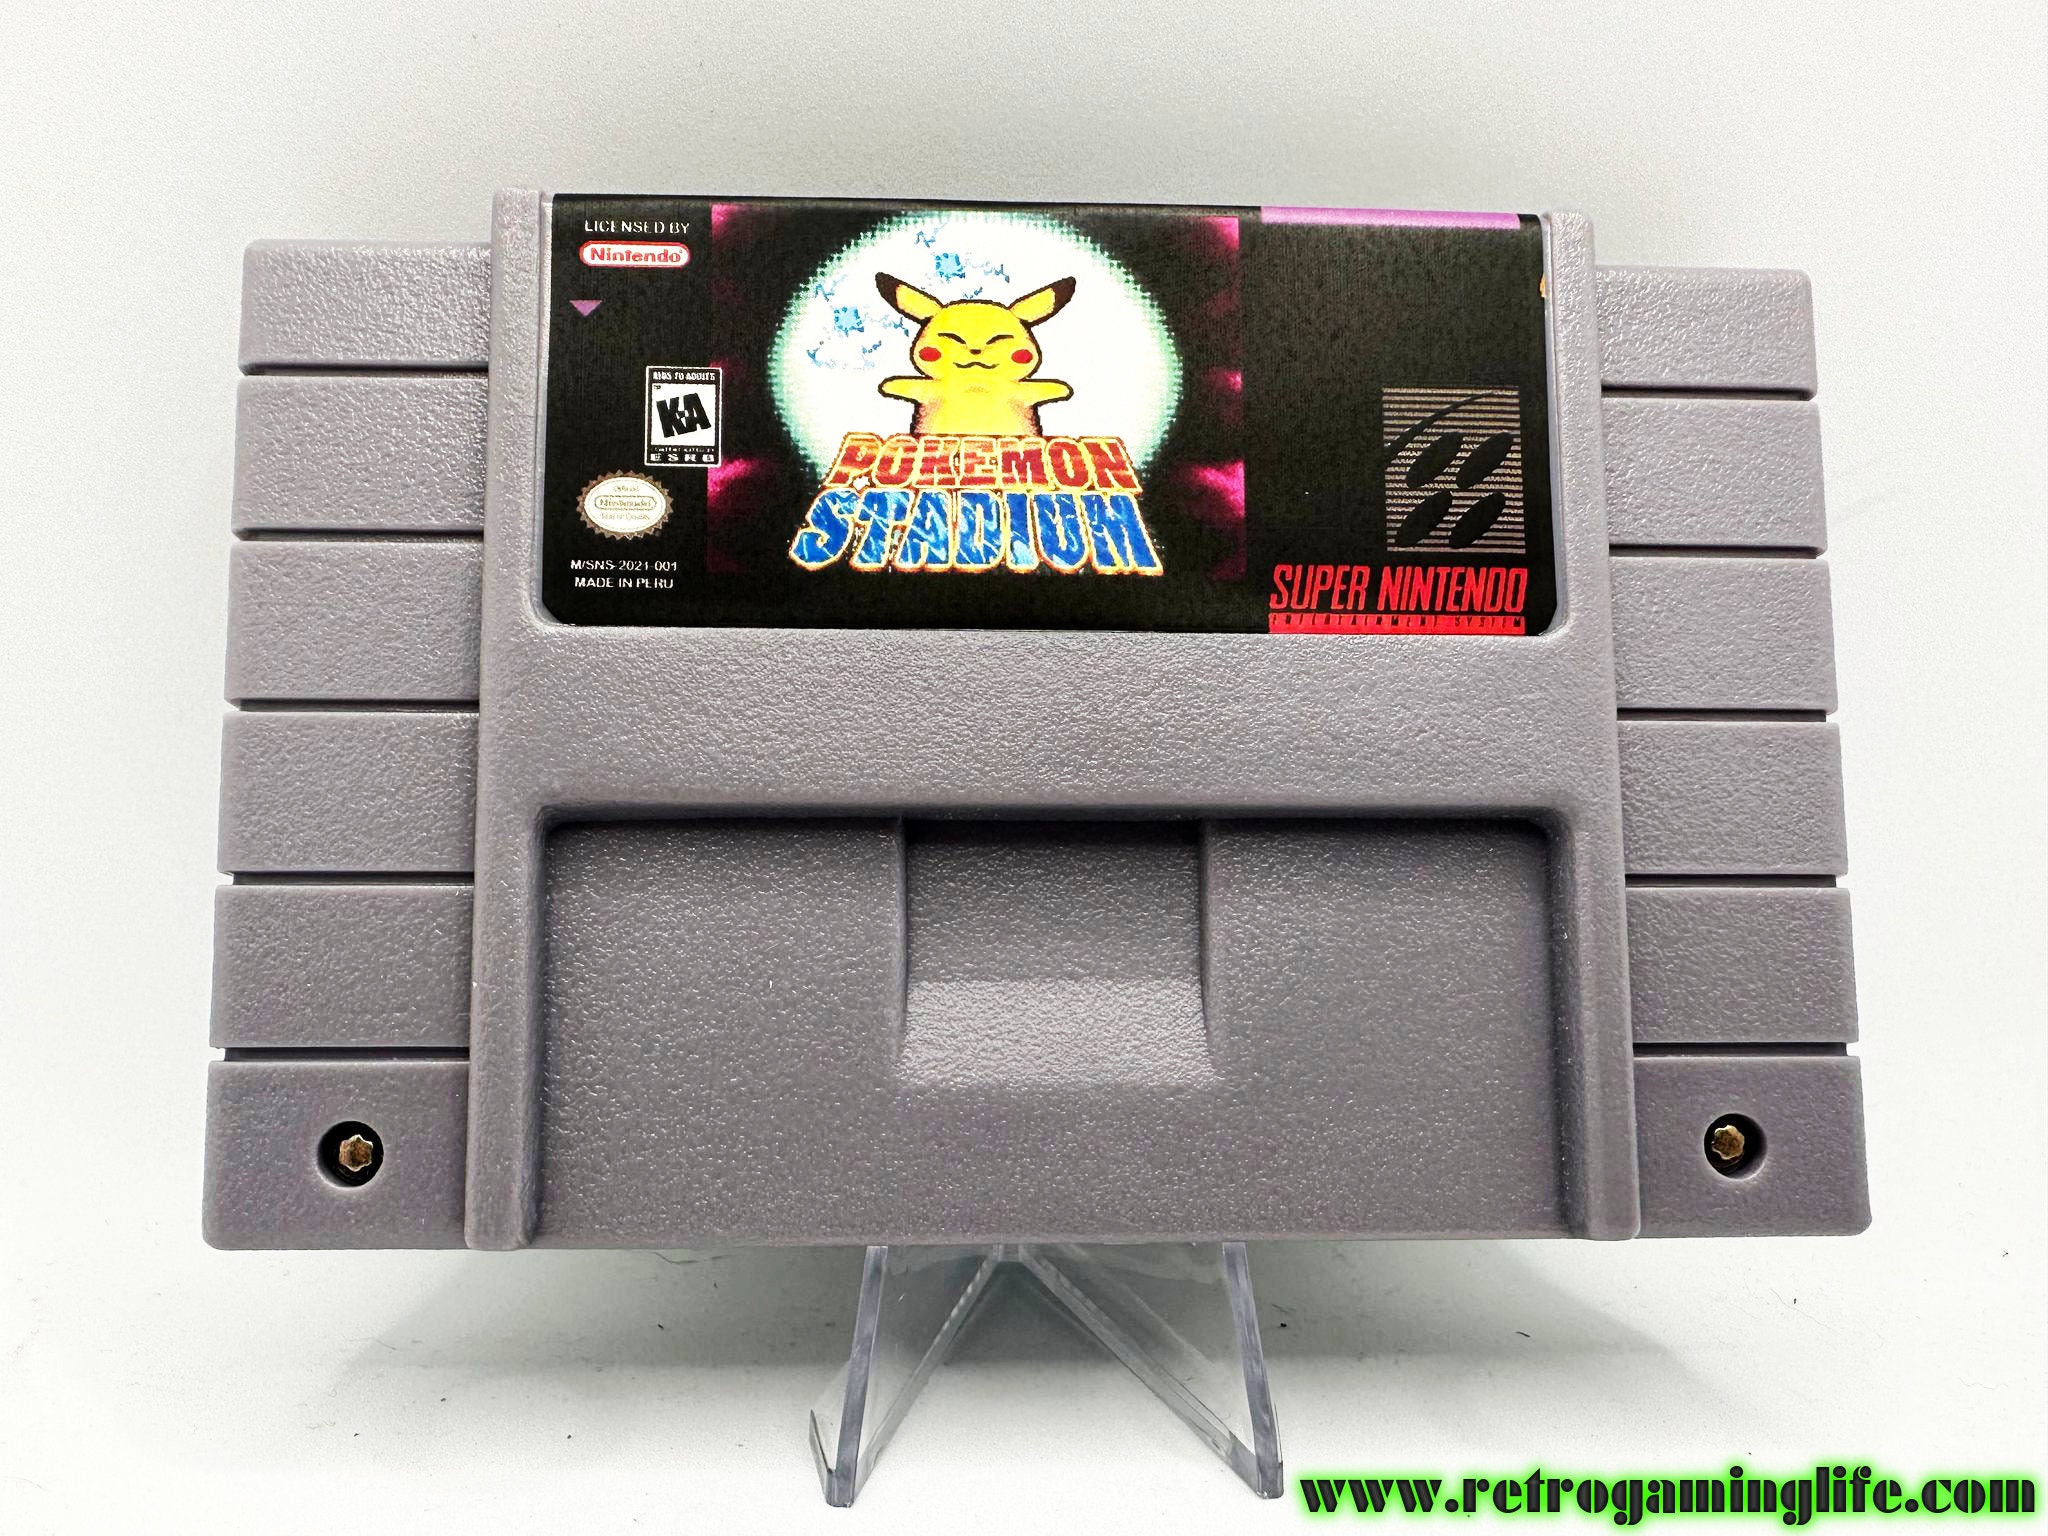 Pokémon Stadium ROM Download - Super Nintendo(SNES)